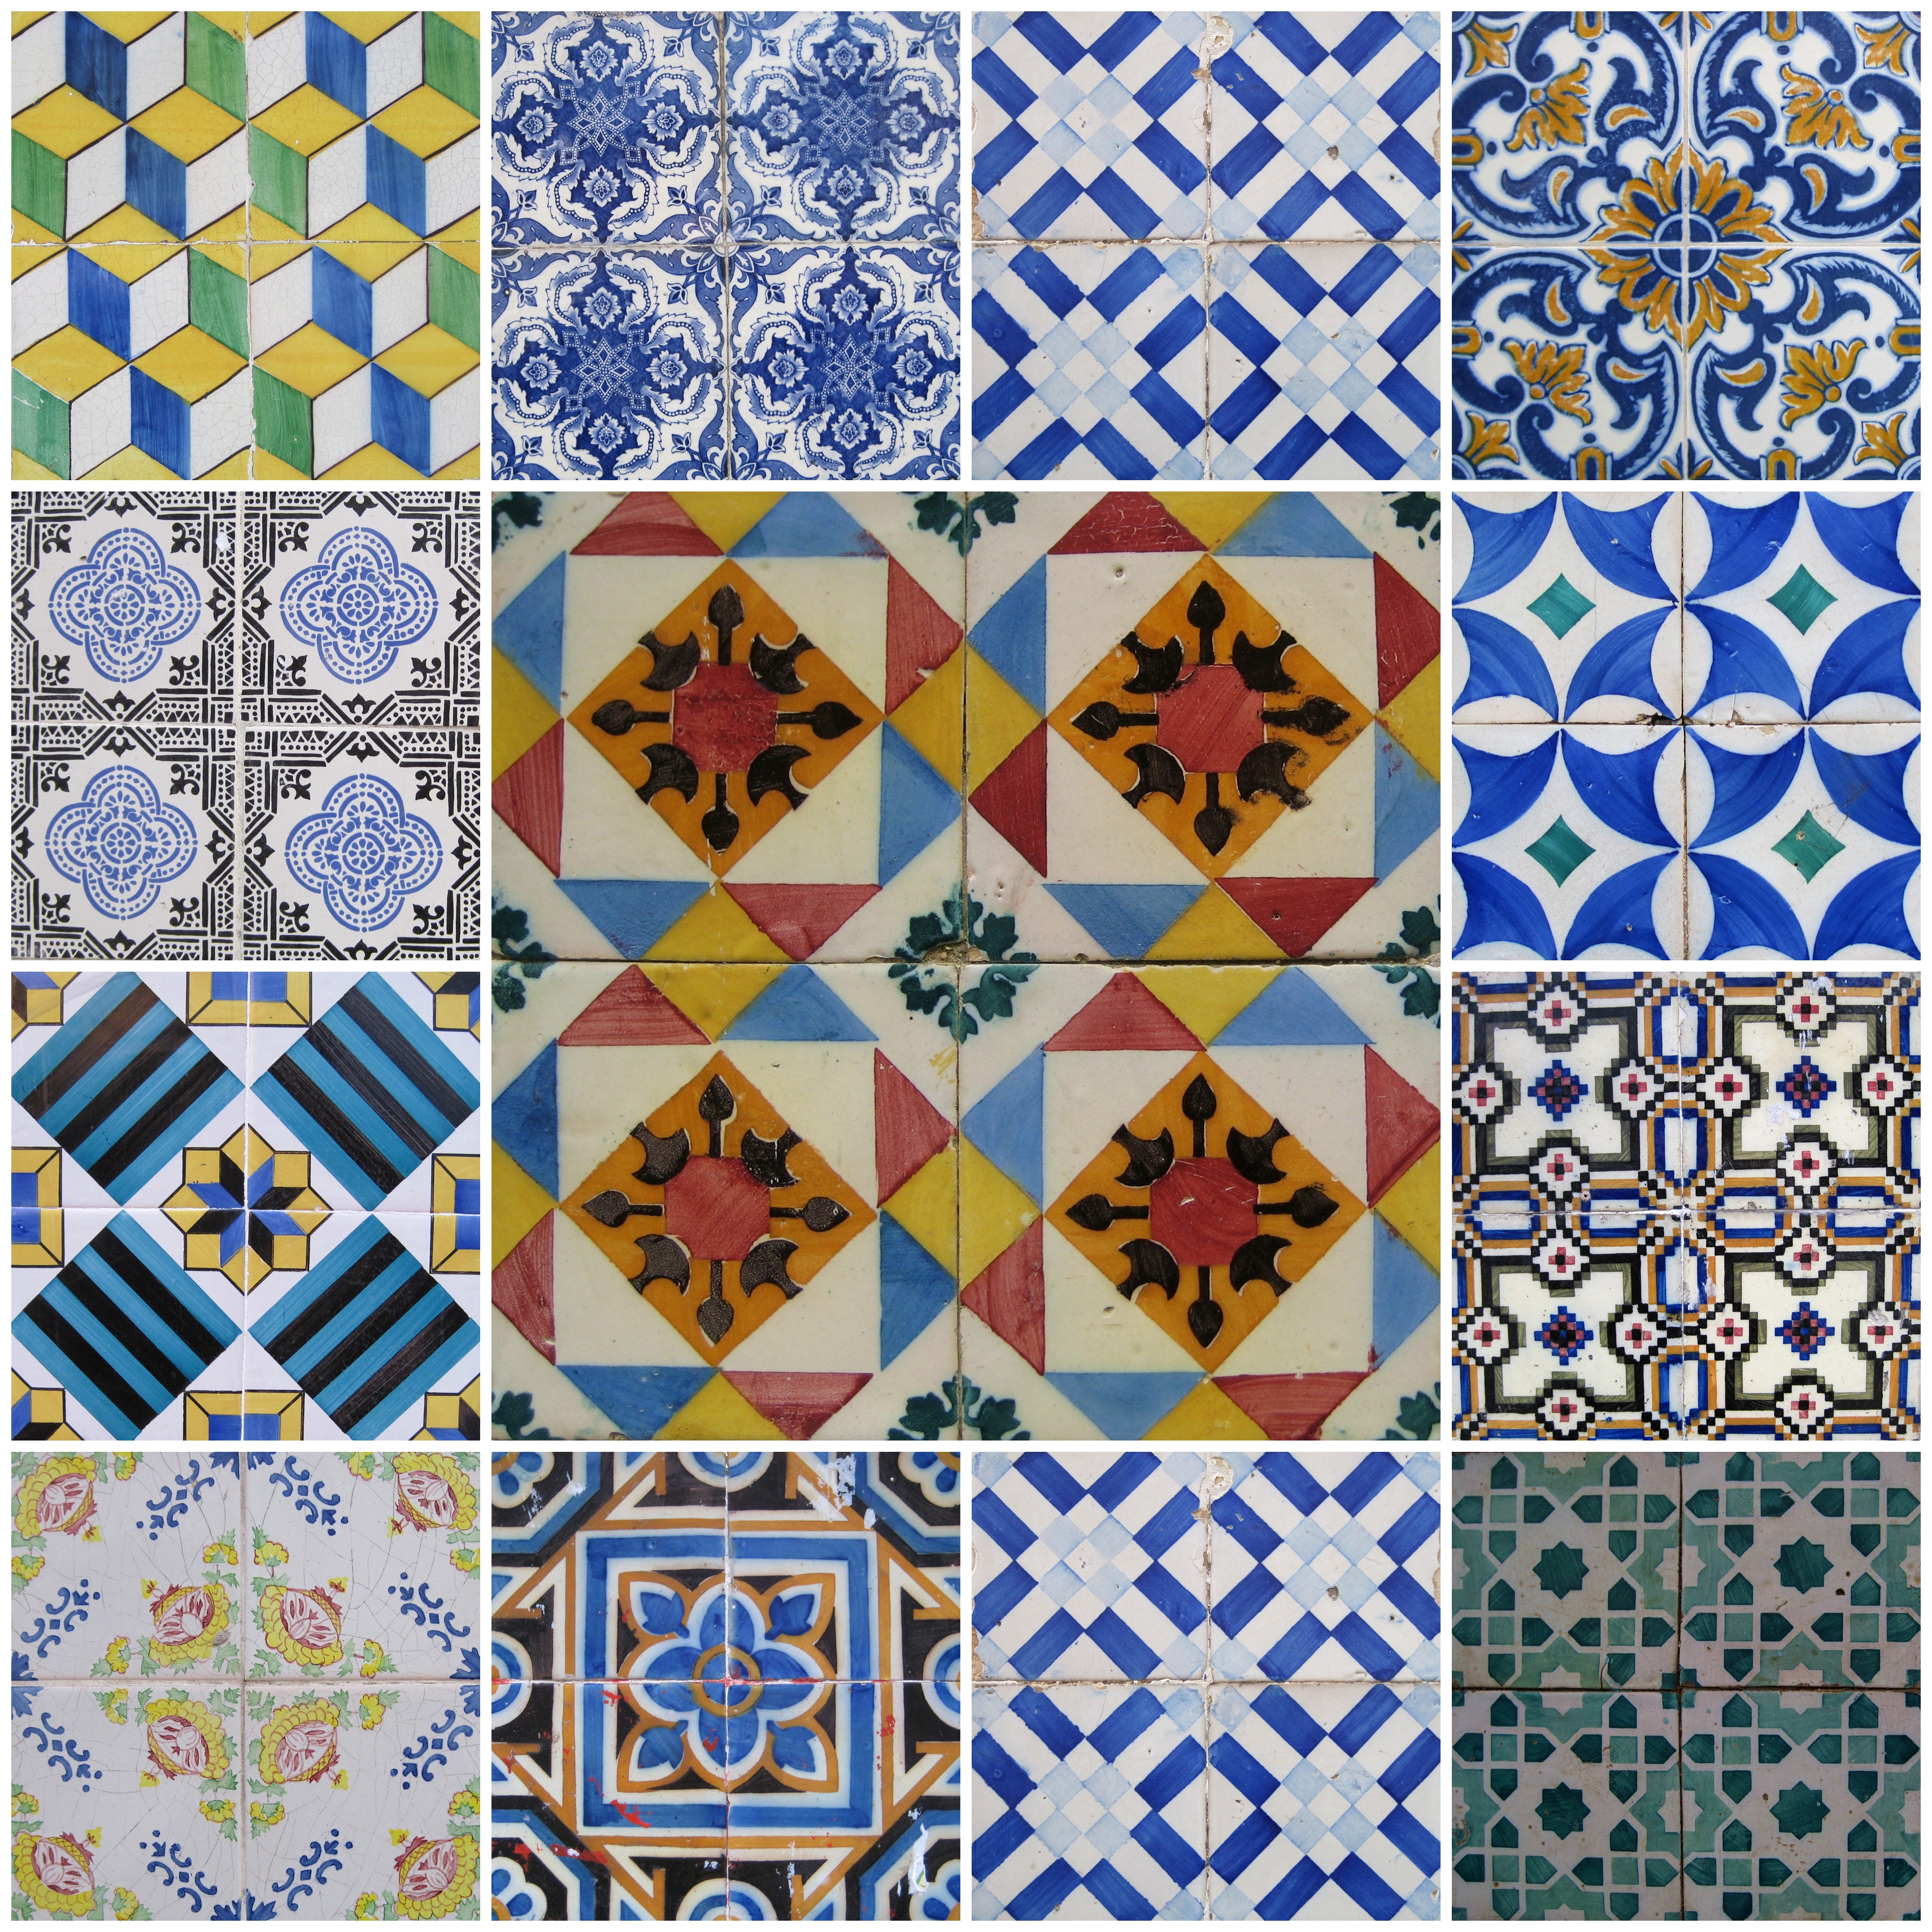 All sizes | Azulejos de Portugal, Lisboa I | Flickr - Photo Sharing!